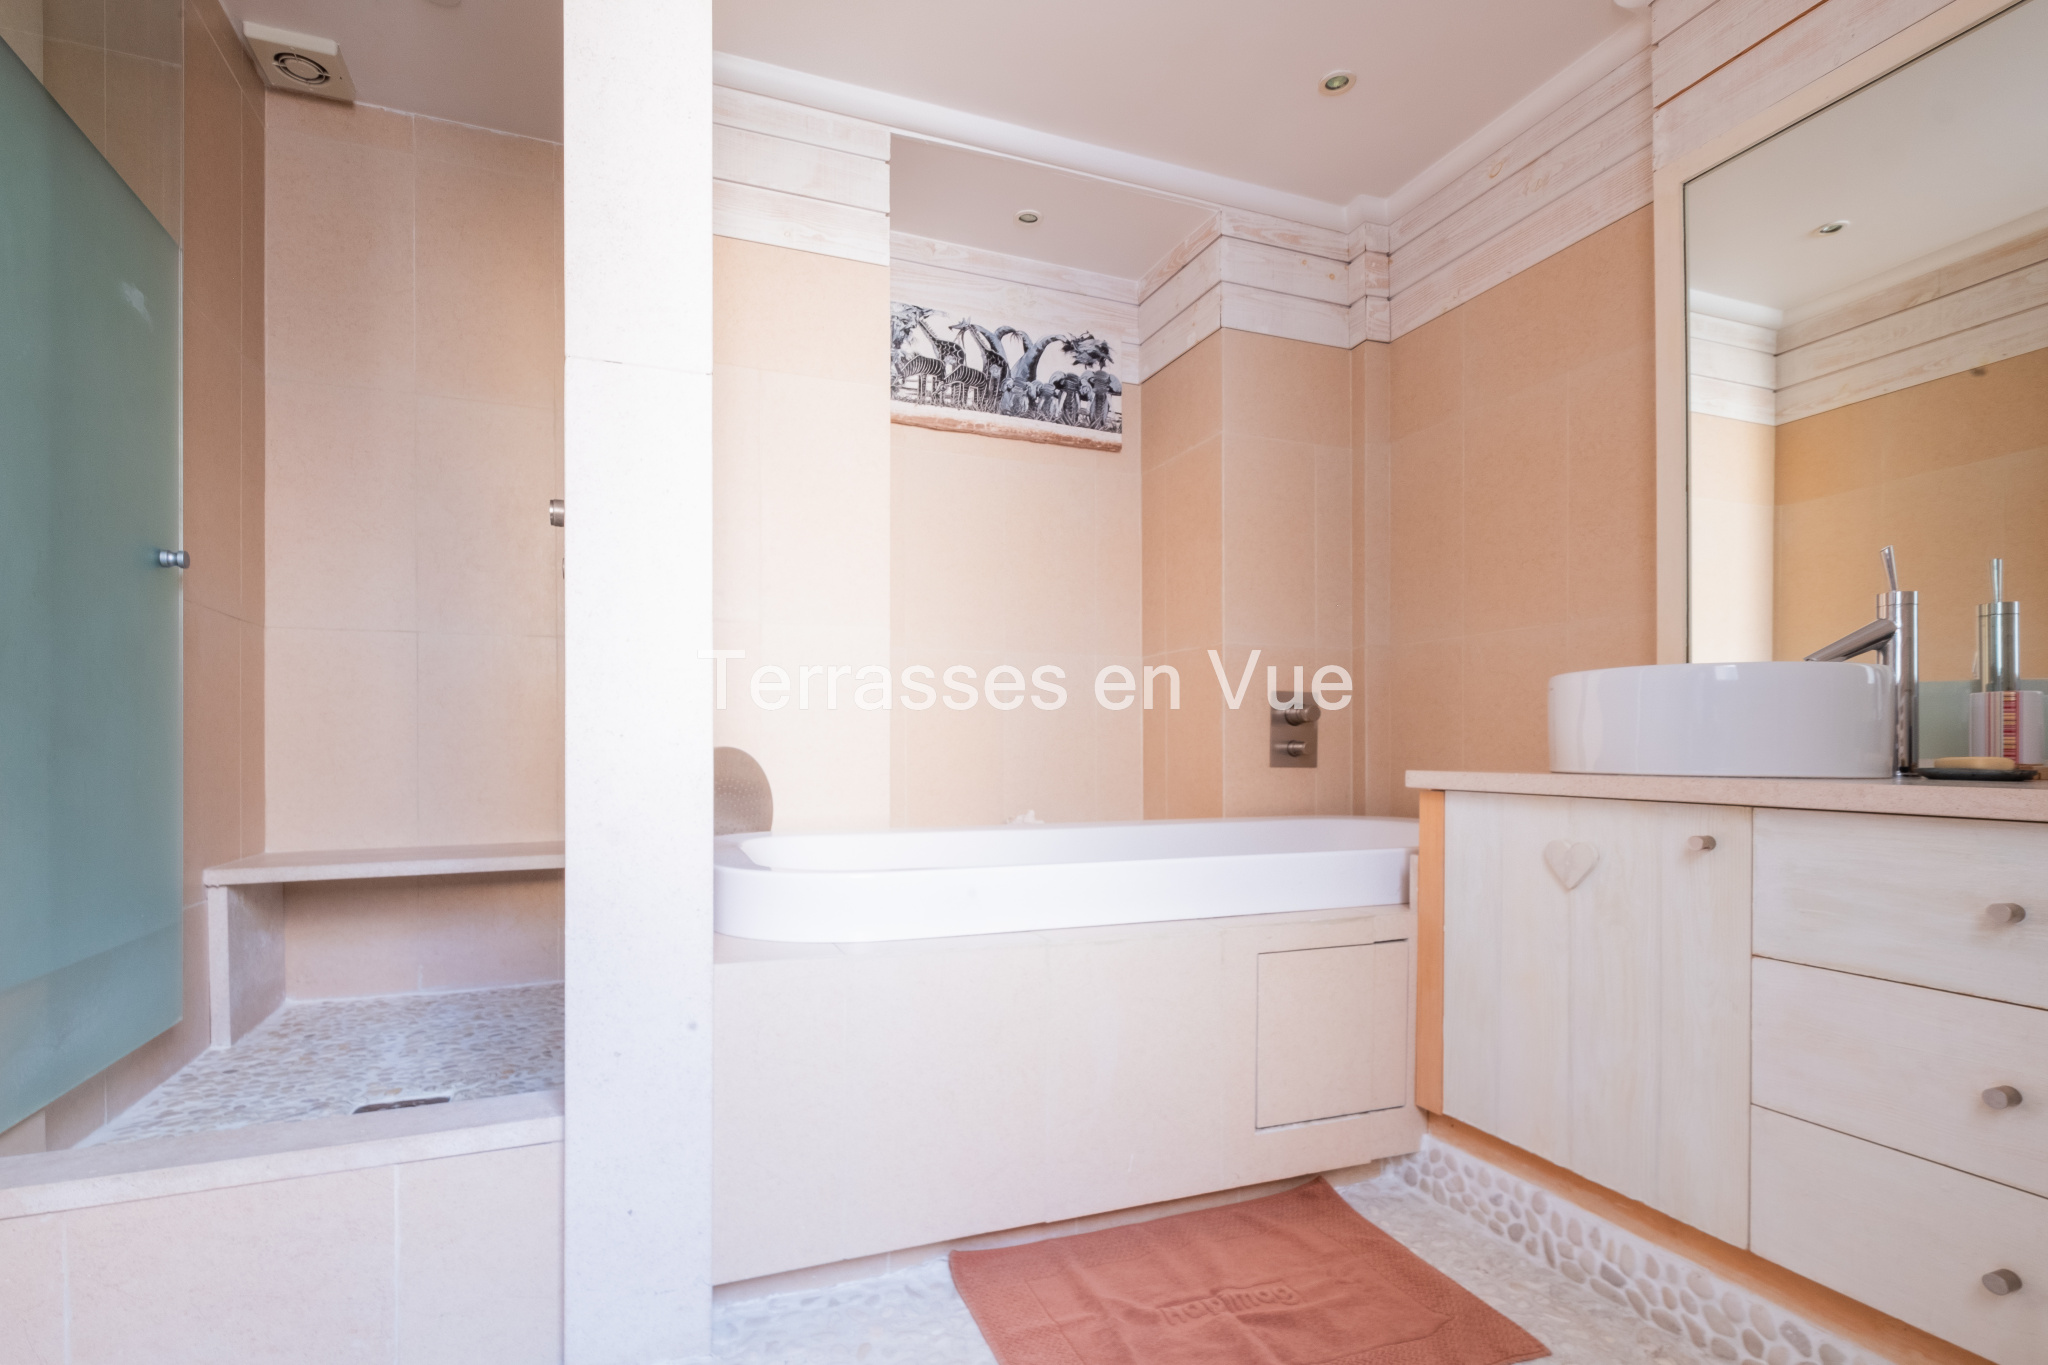 Apartment for sale - Paris / 75008